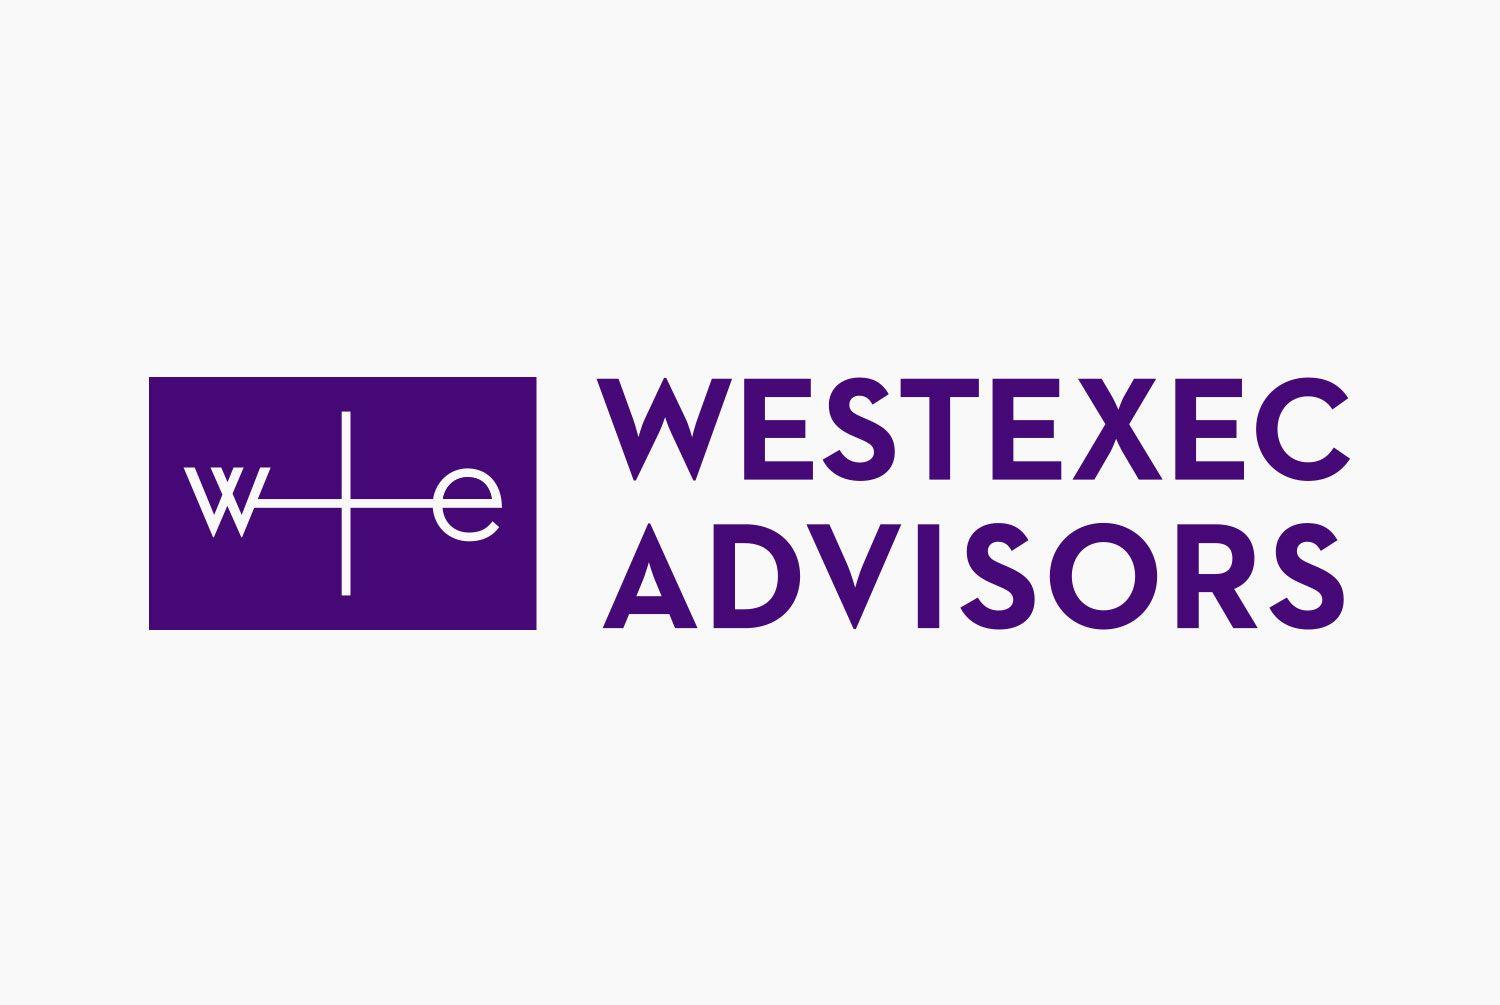 Exec Logo - West Exec Logo